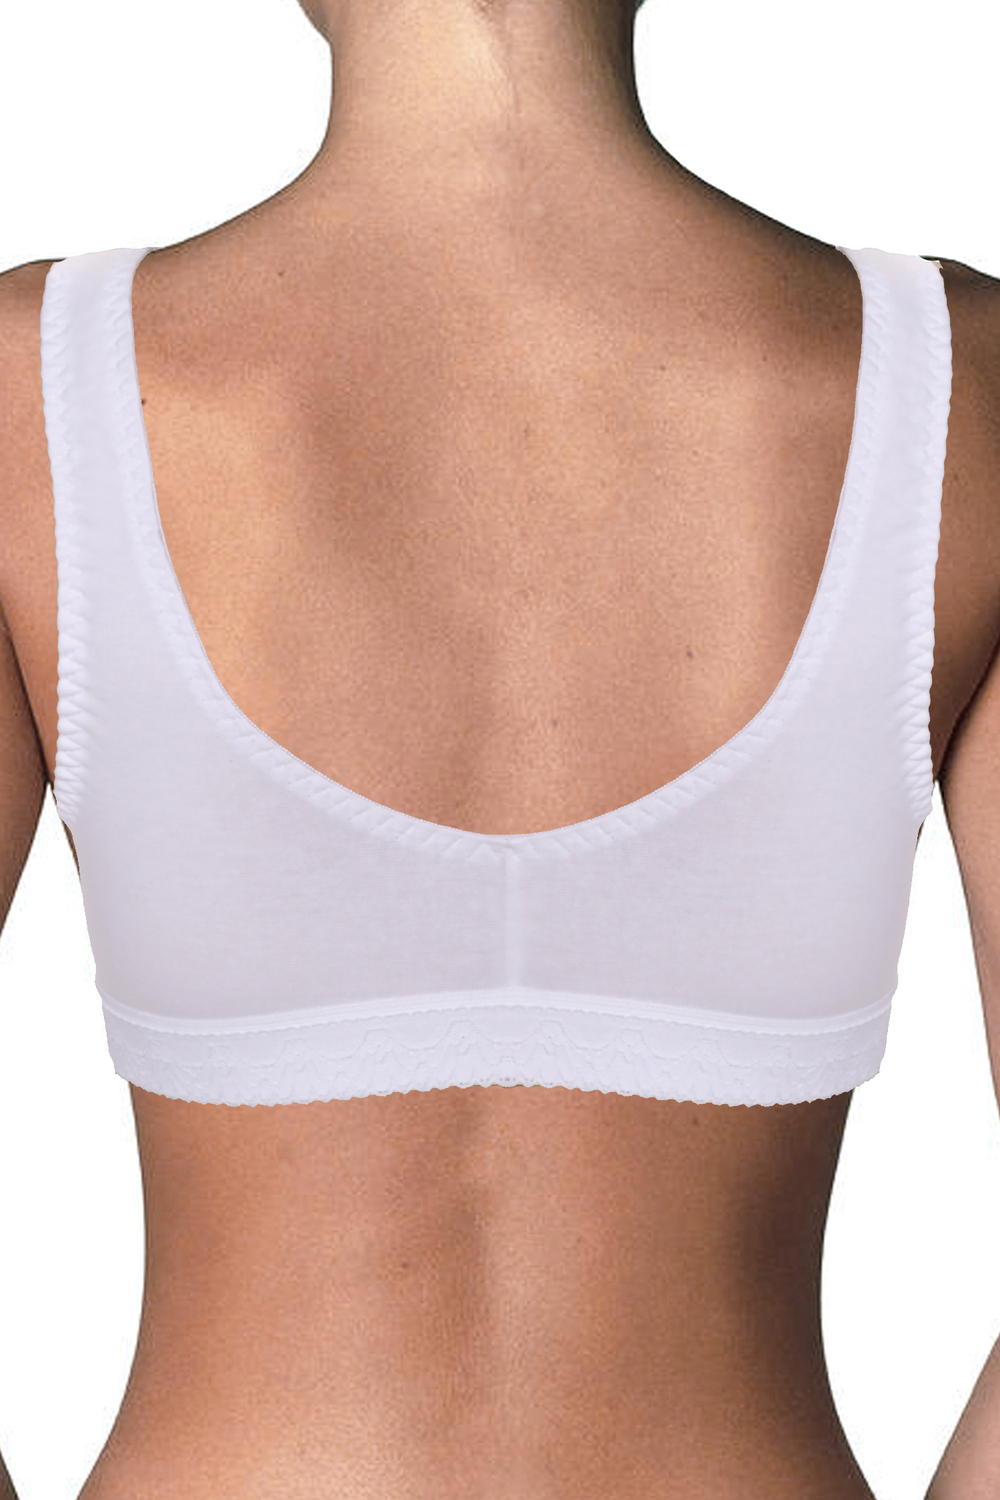 NINTEEN-69 Cotton Plain Imported Bra for Women White